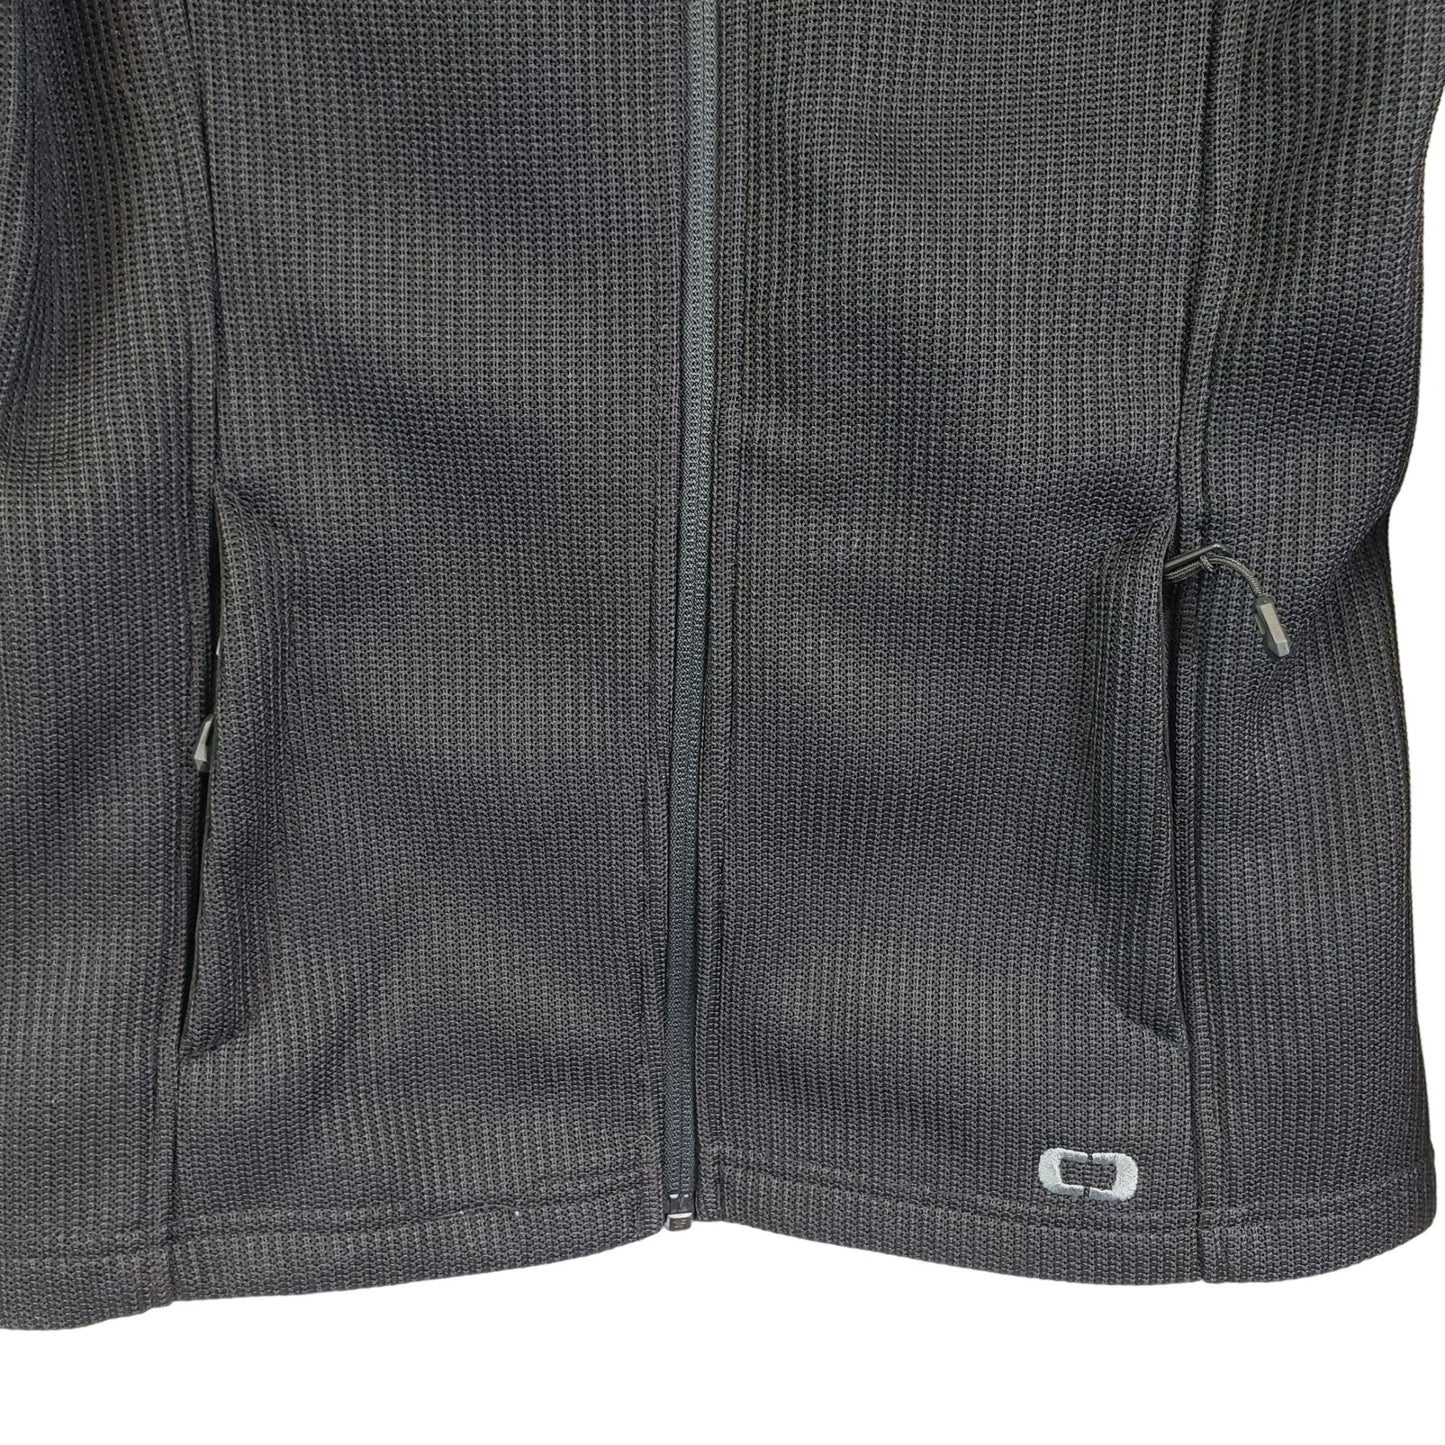 OGIO Textured Full Zip Activewear Jacket Size XS